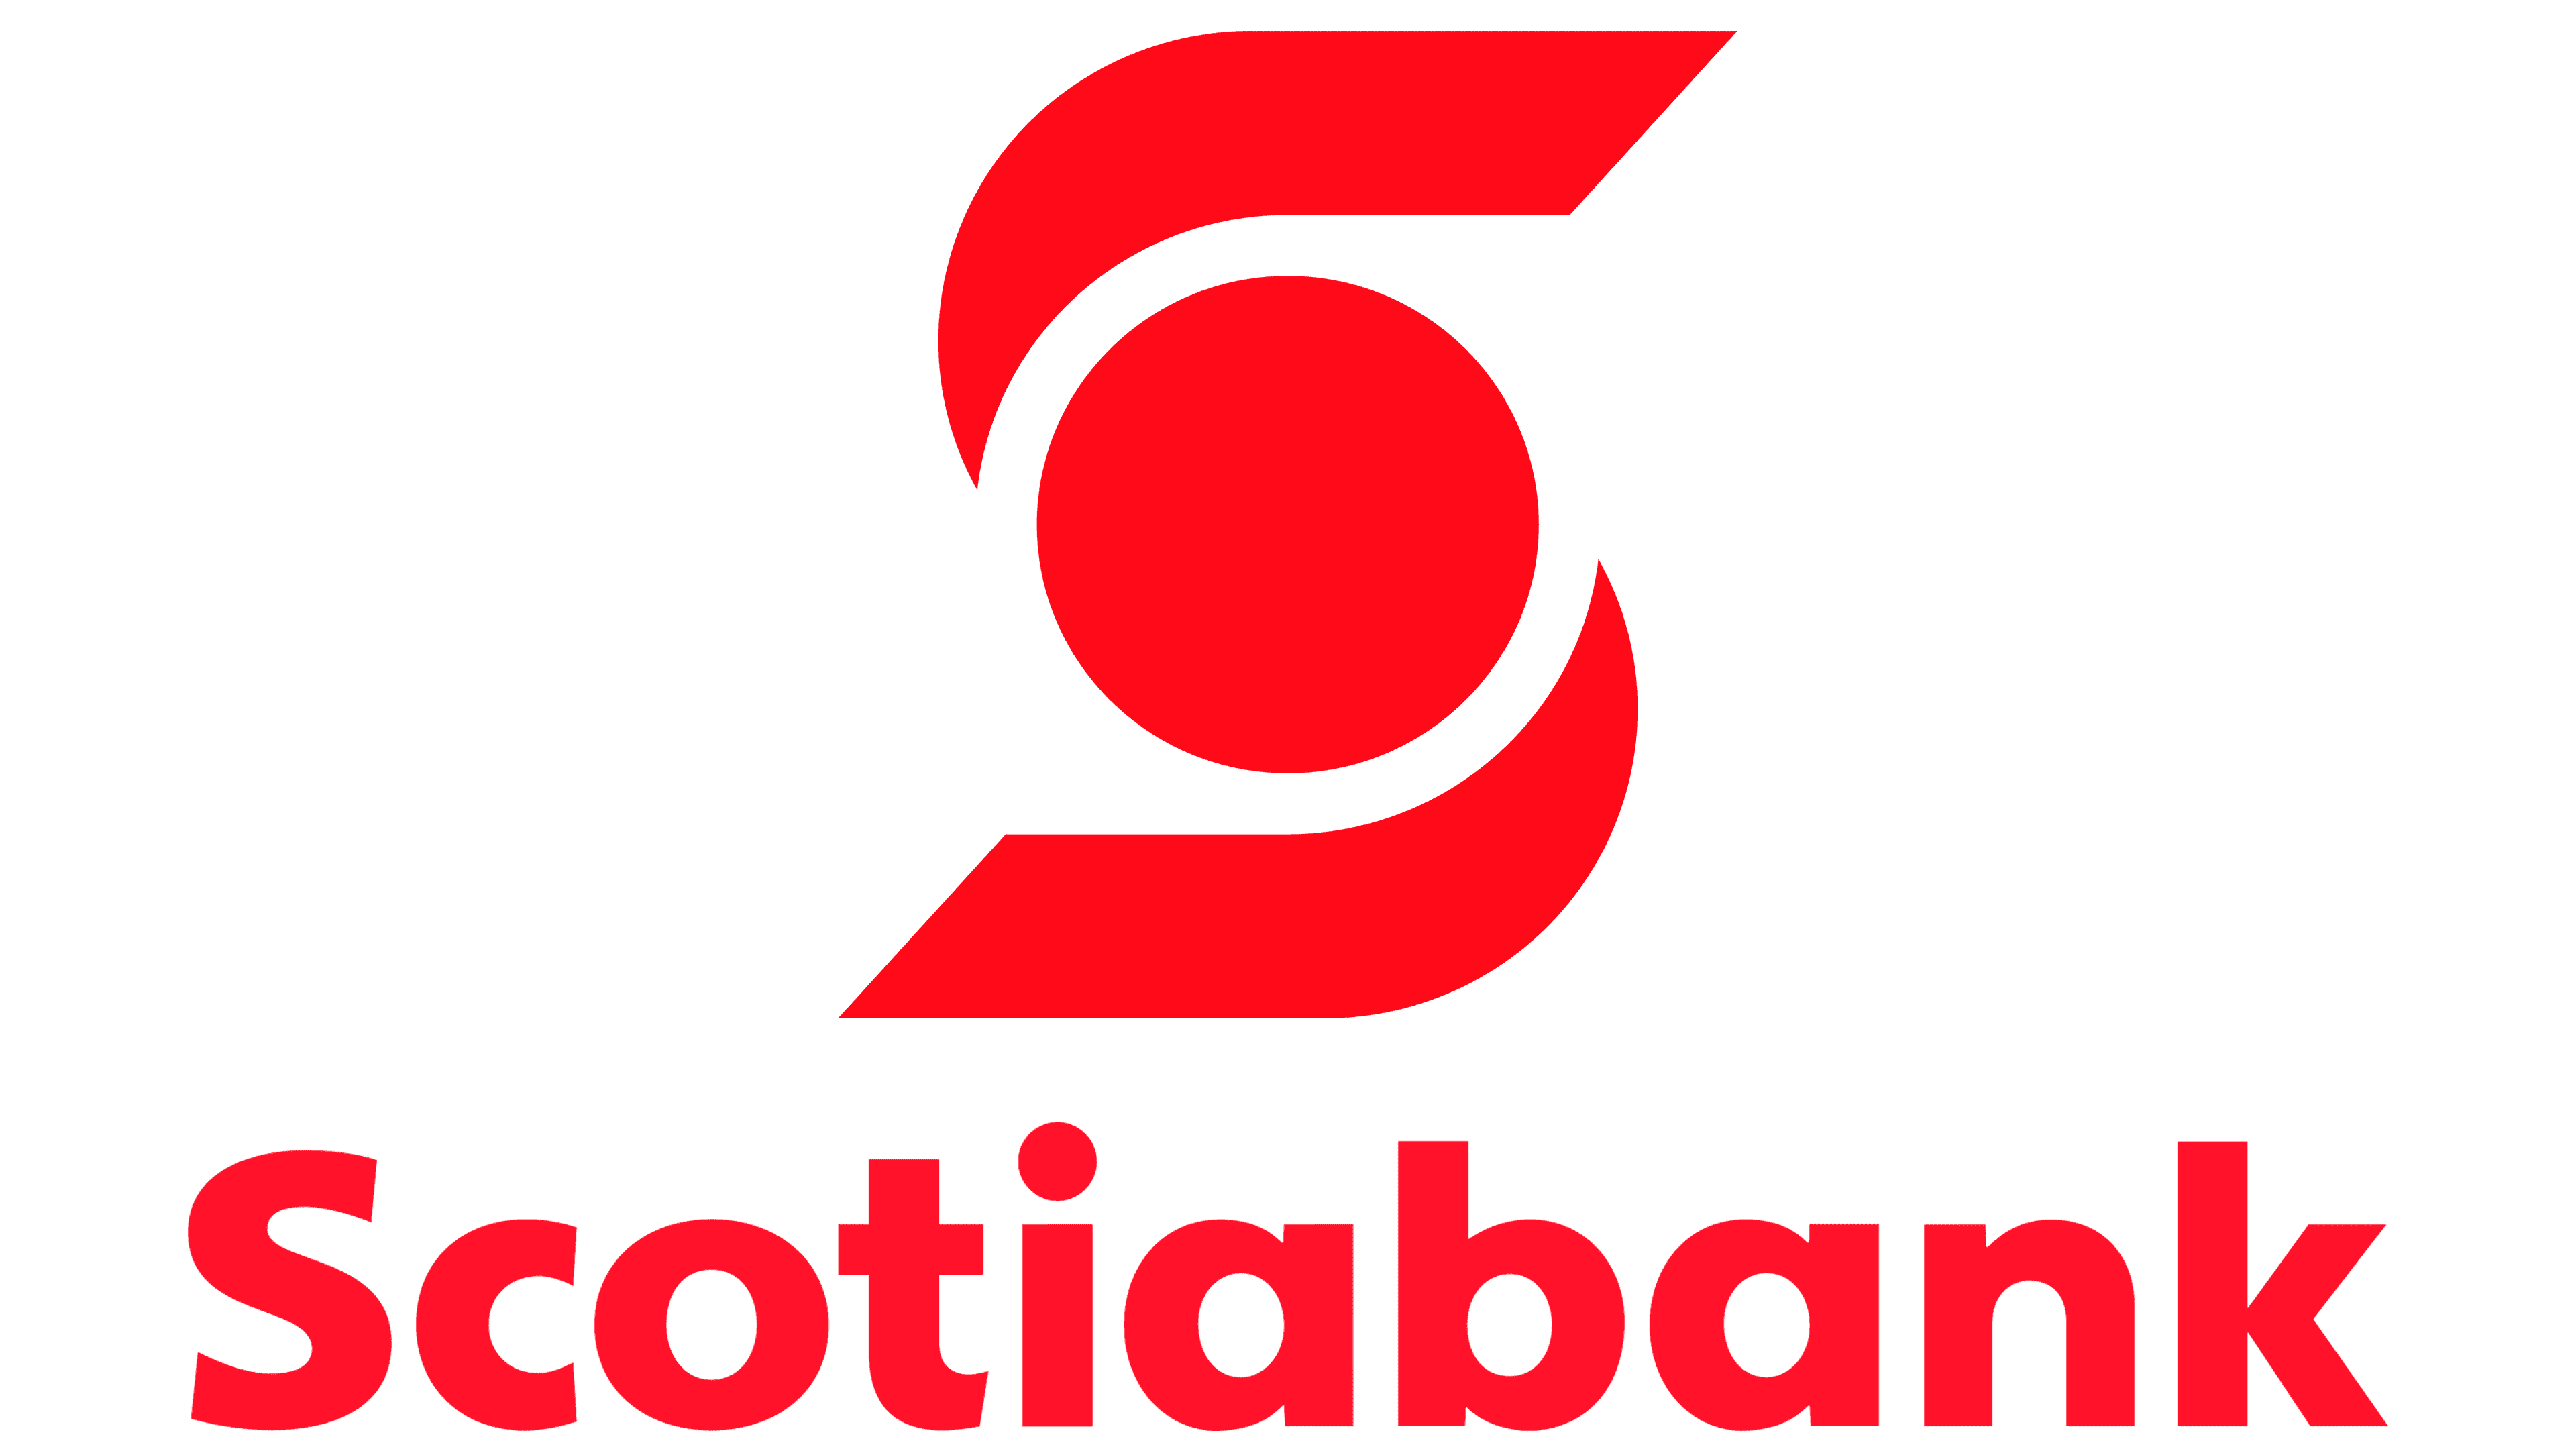 Scotiabank MomentumPLUS Savings Account